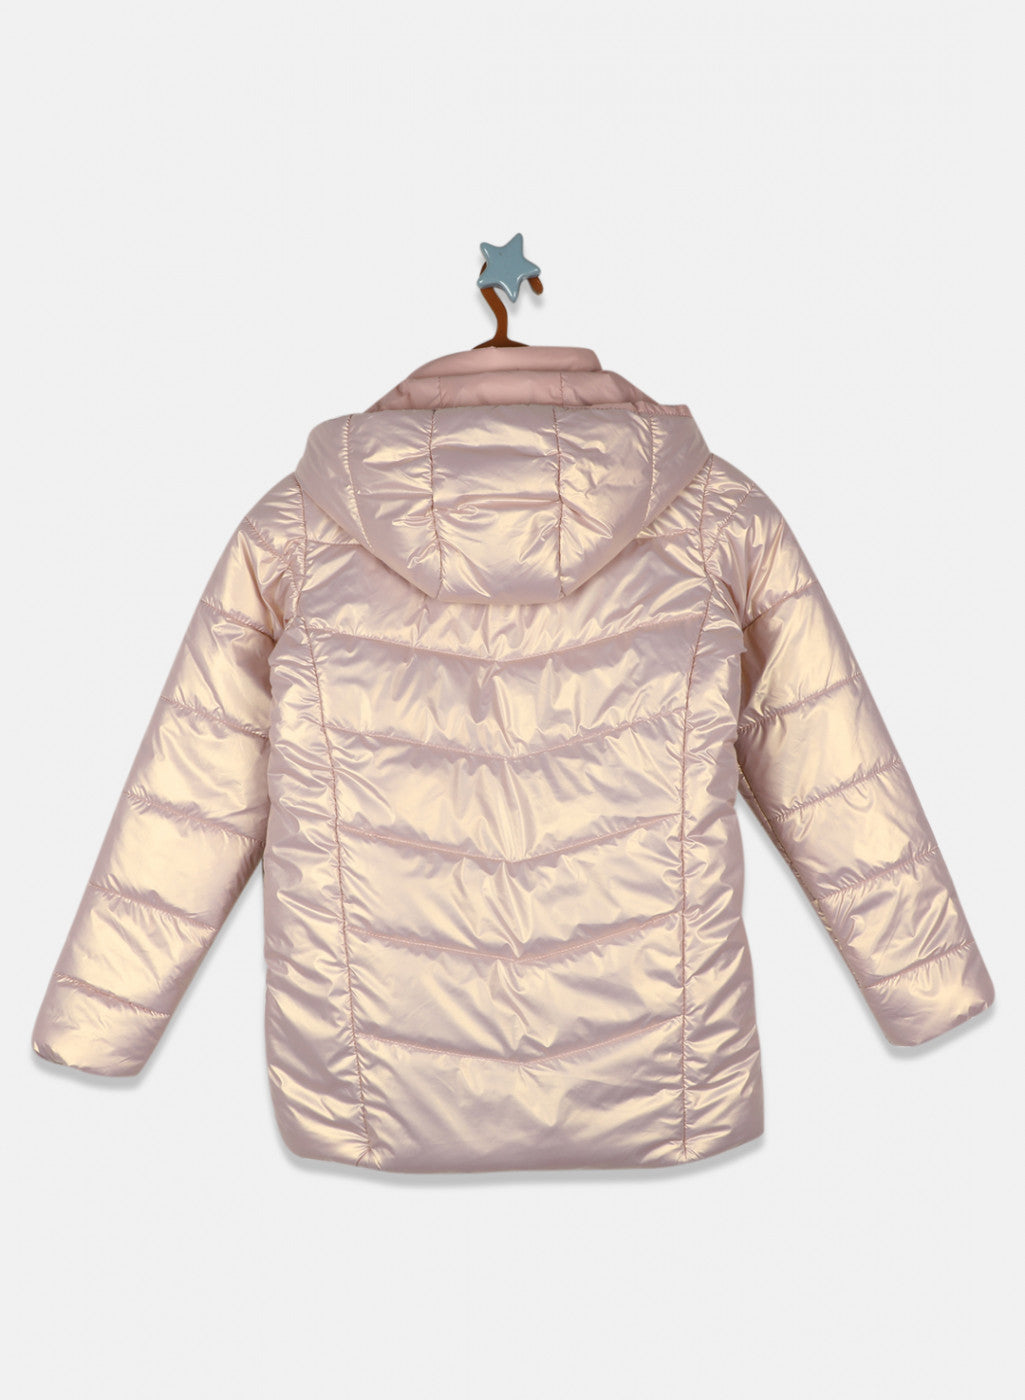 Girls Peach Solid Jacket